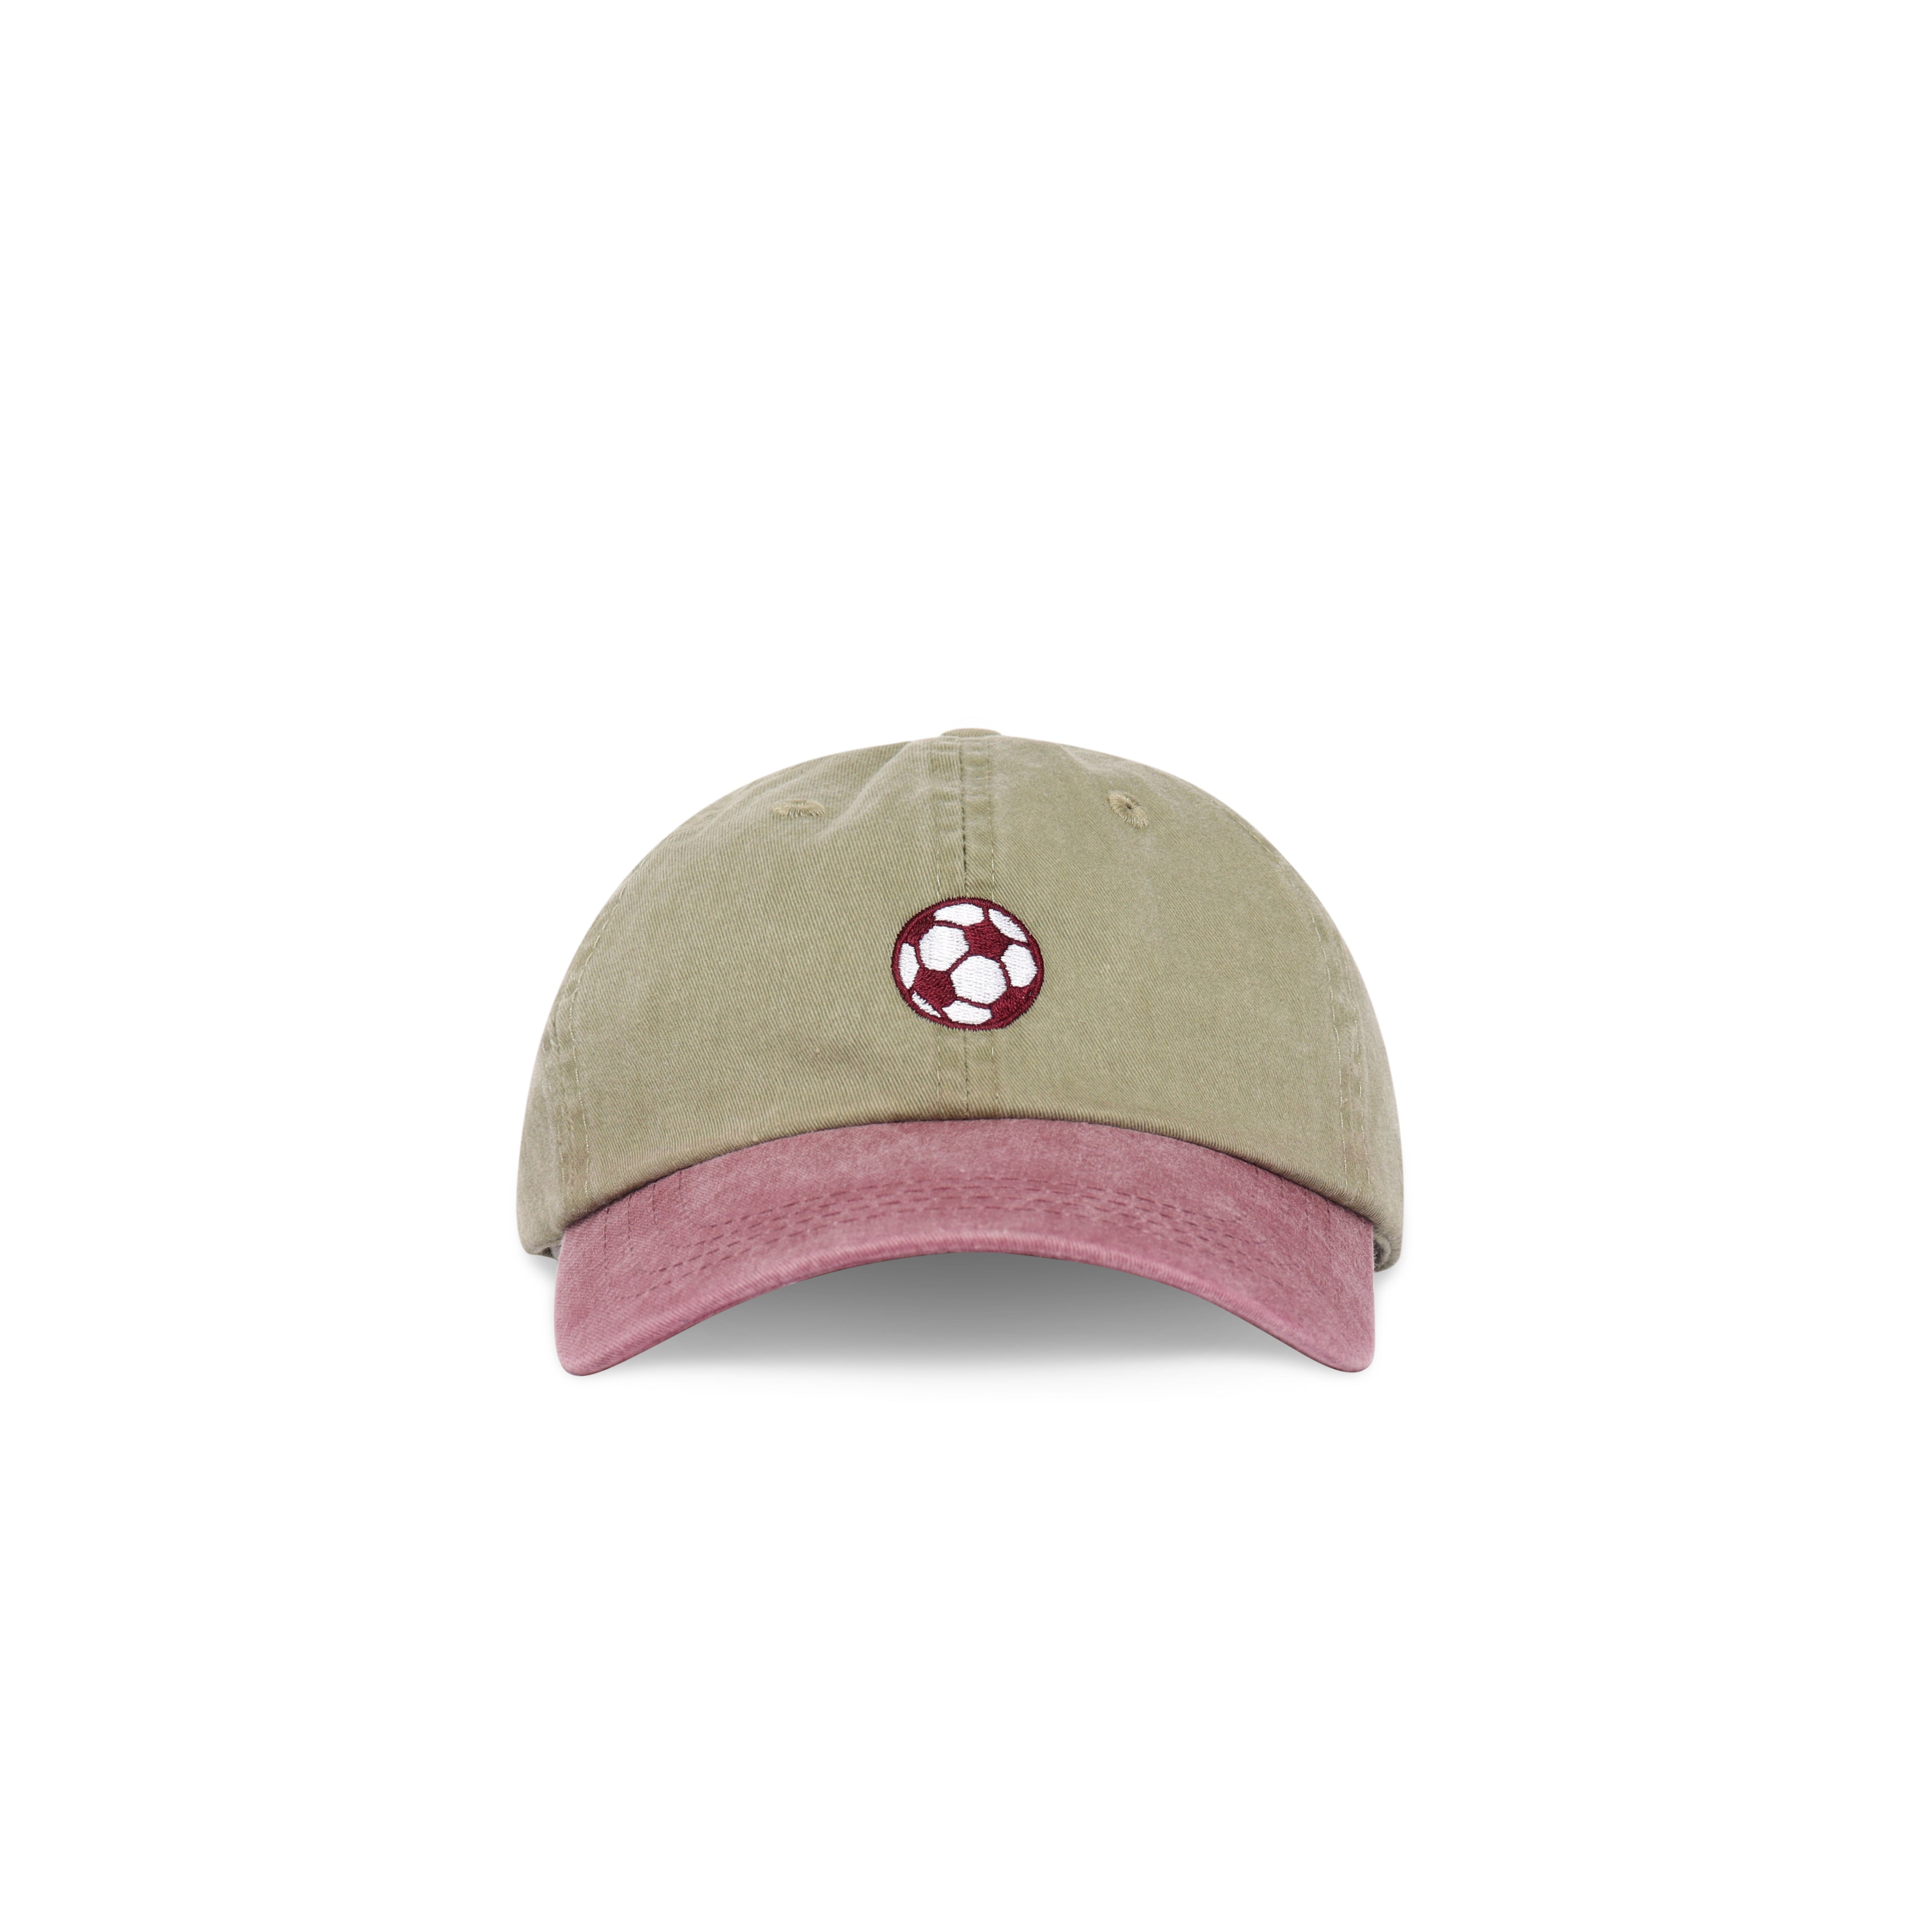 Soccer Ball Cap - Khaki / Maroon